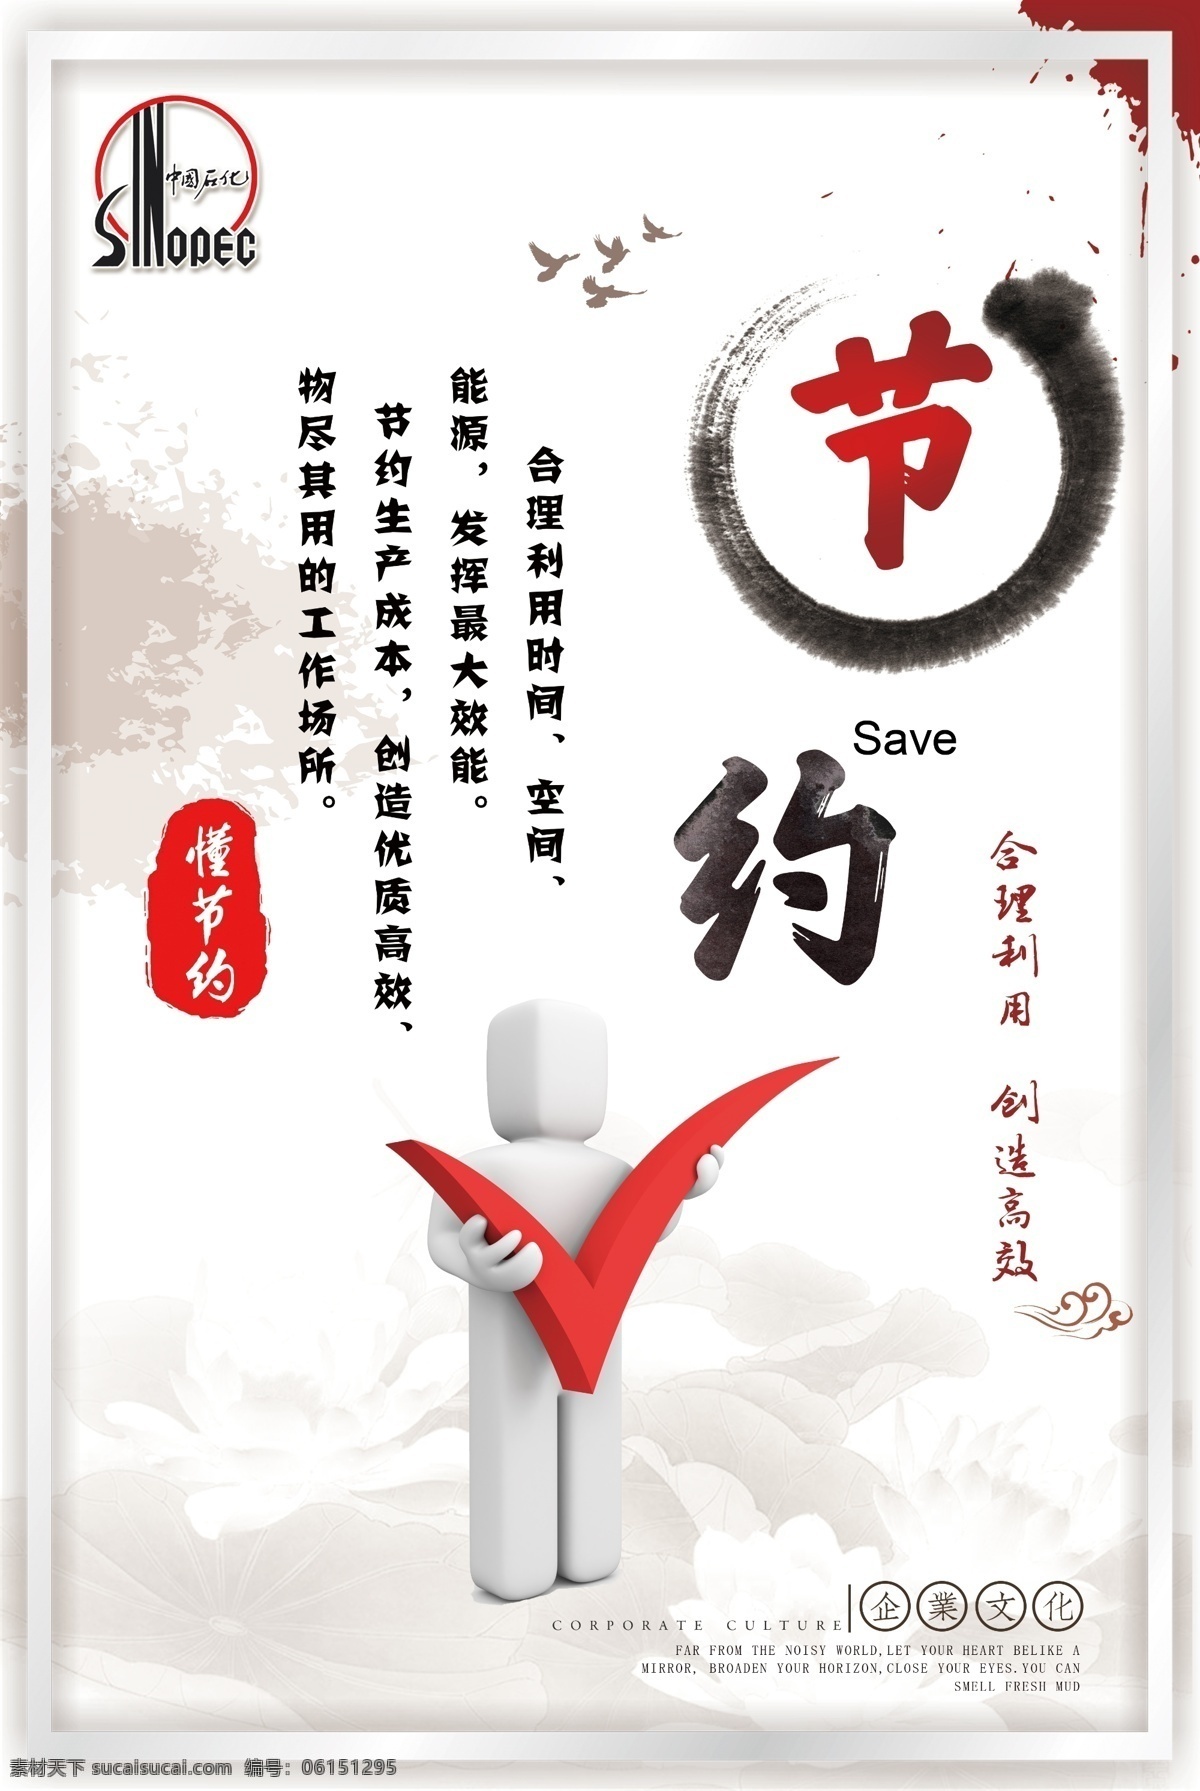 7s 节约 中国石化 小白人 水墨画 企业文化 企业精神 室外广告设计